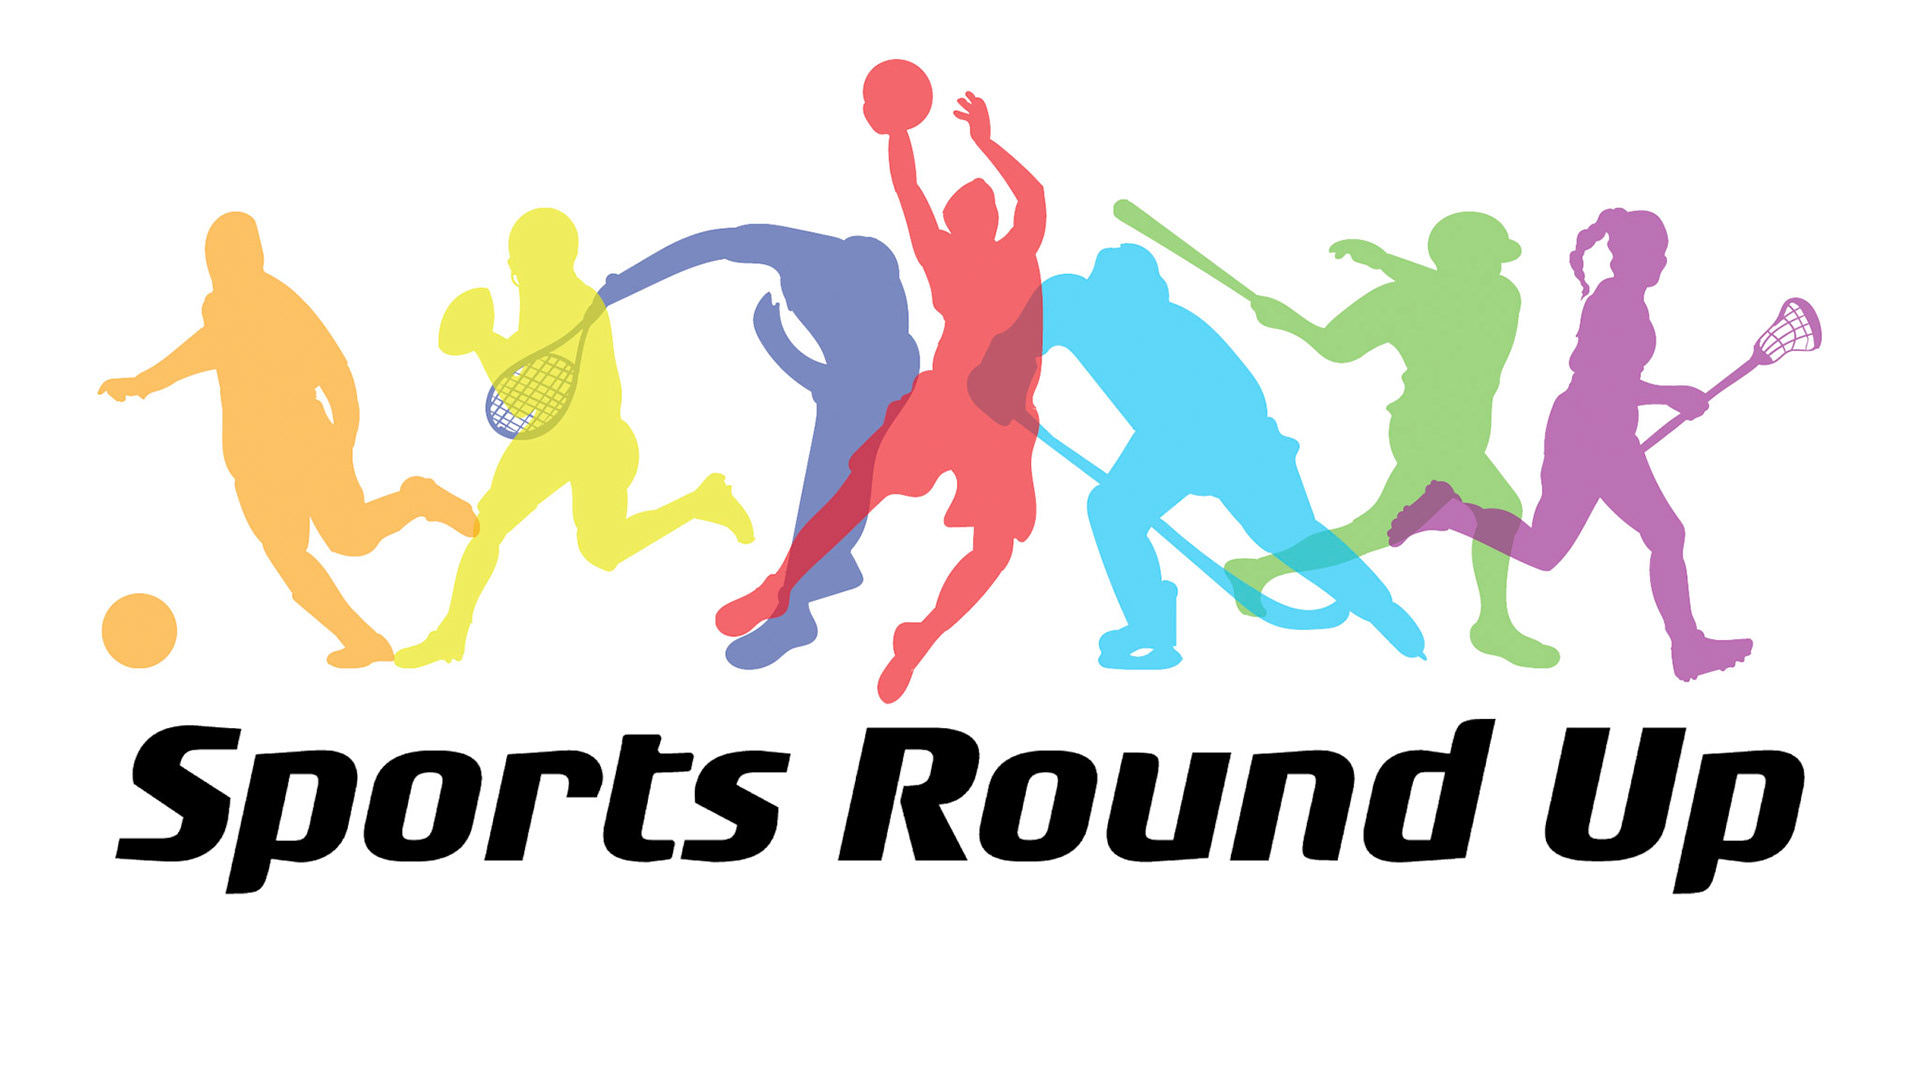 Round sport. Портфолио спорт. Portfolio for Sports. Text for students b1 Sport Athletics Competition.